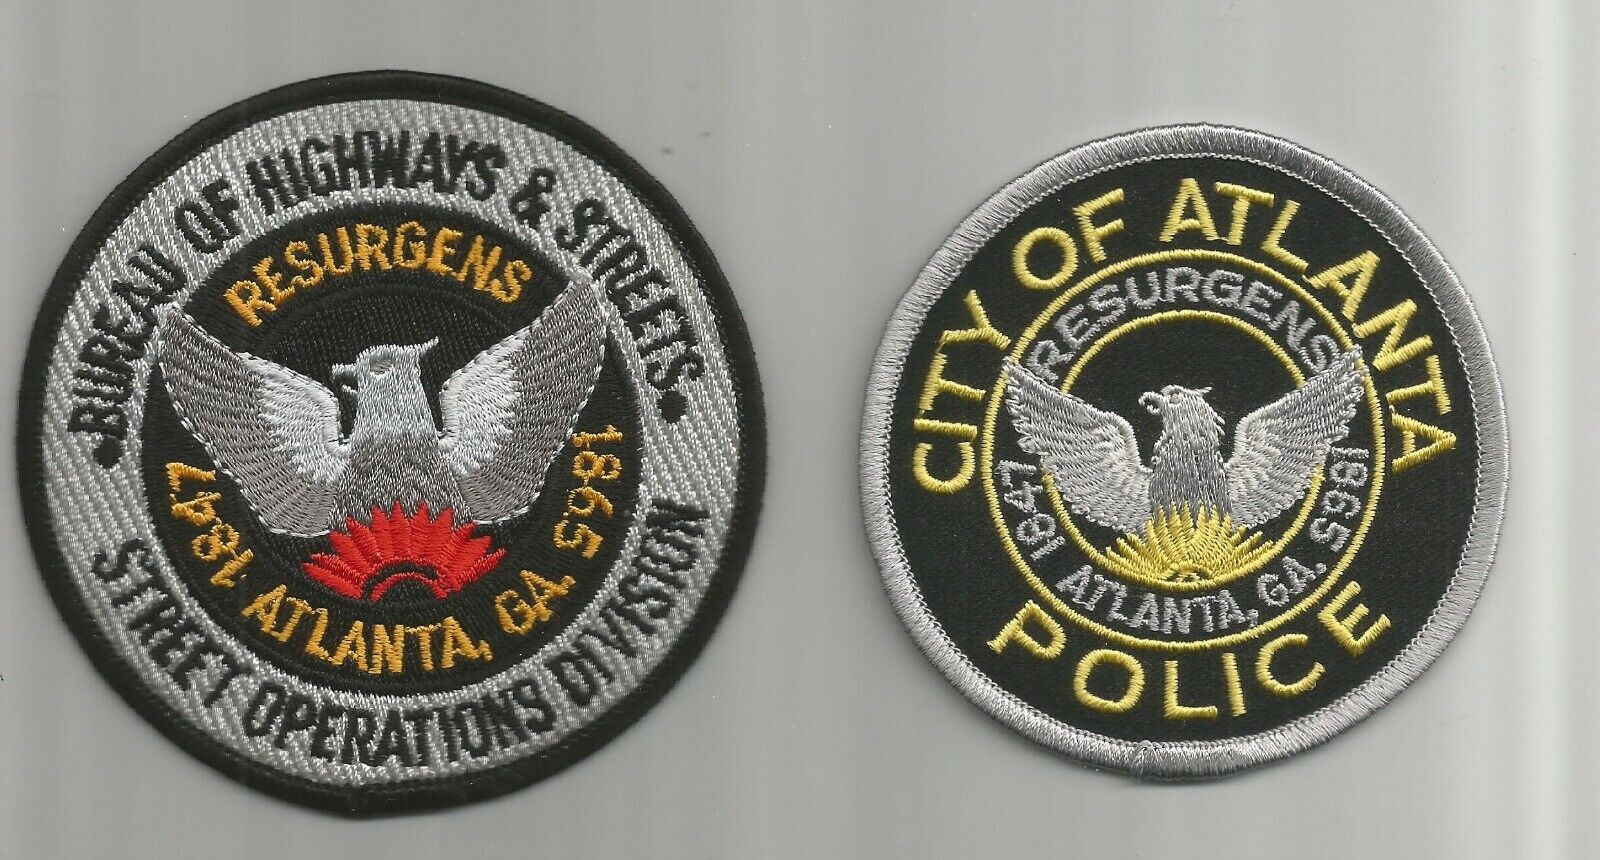 City of Atlanta Police & Bureau of Highways & Streets, Georgia     2 different 